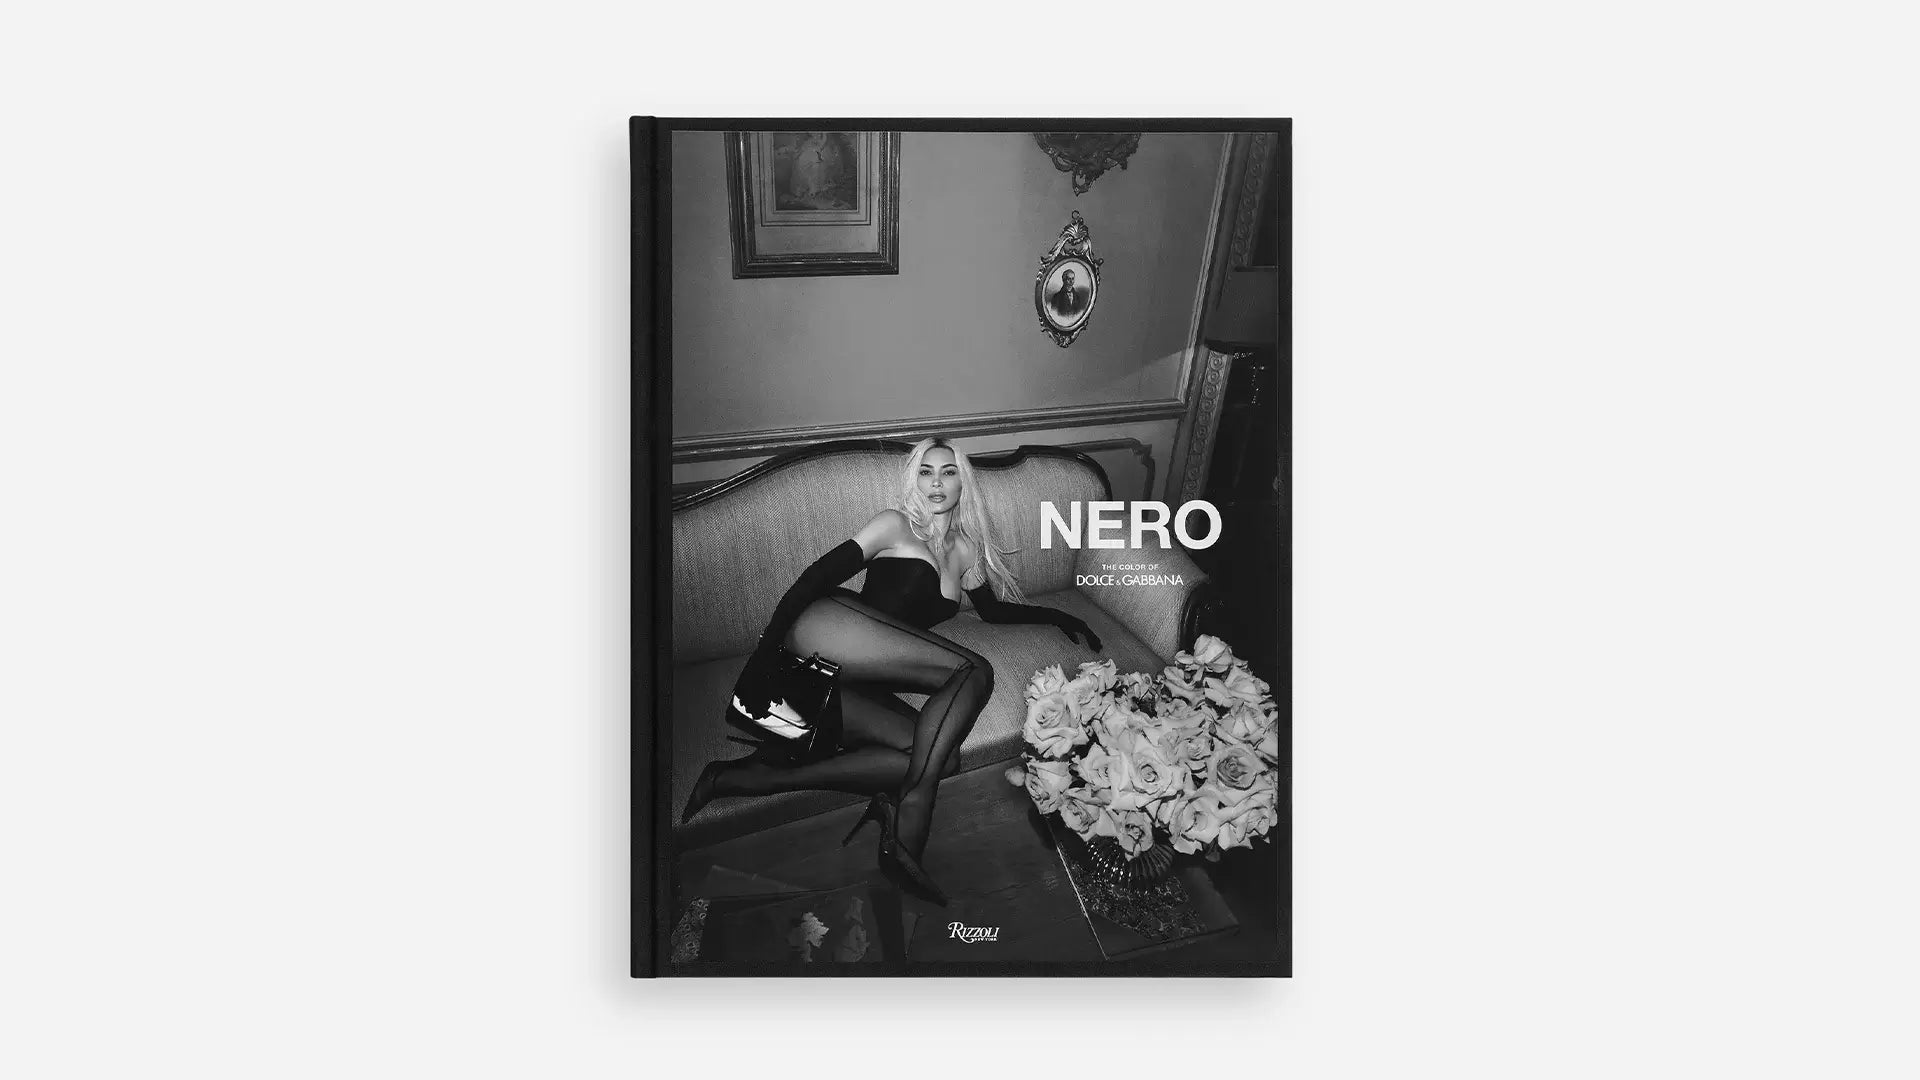 NERO Is The Distinctive Color Of Dolce&Gabbana